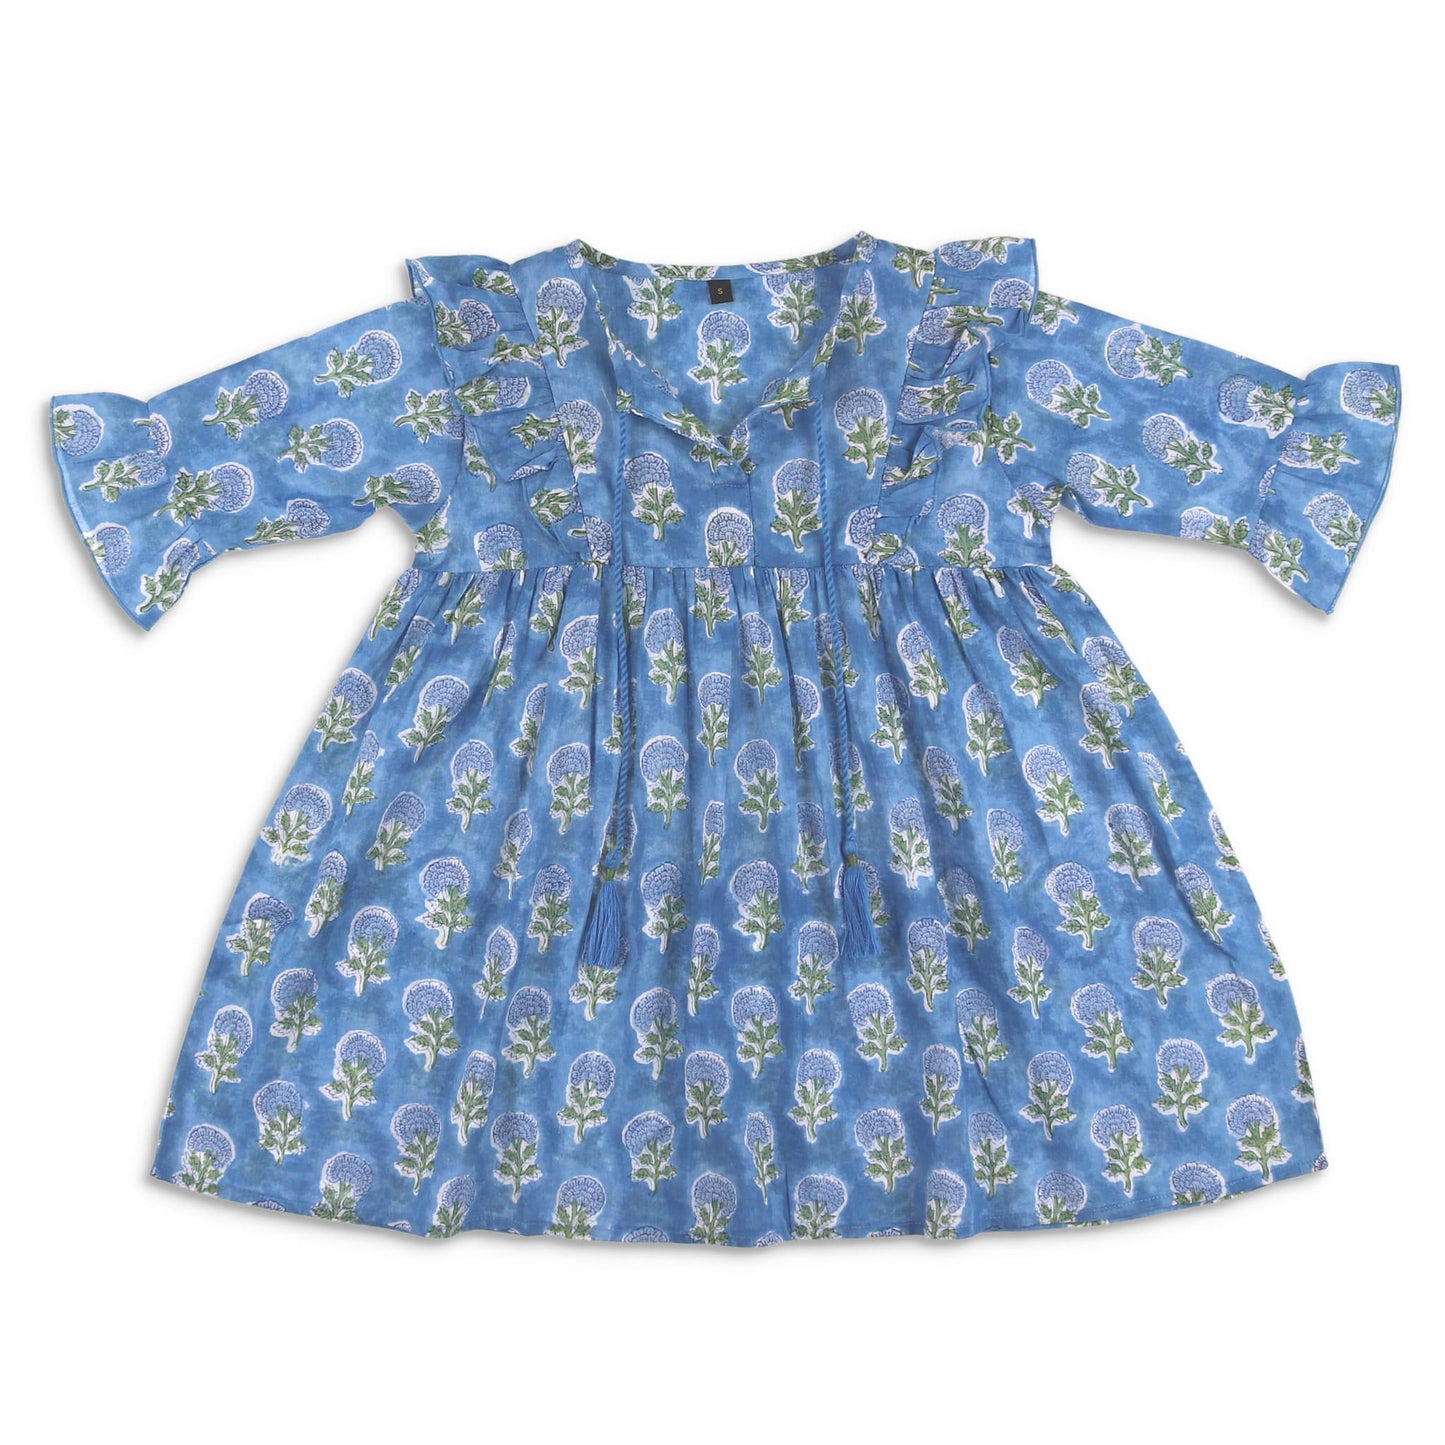 Blueberry Maisy Dress